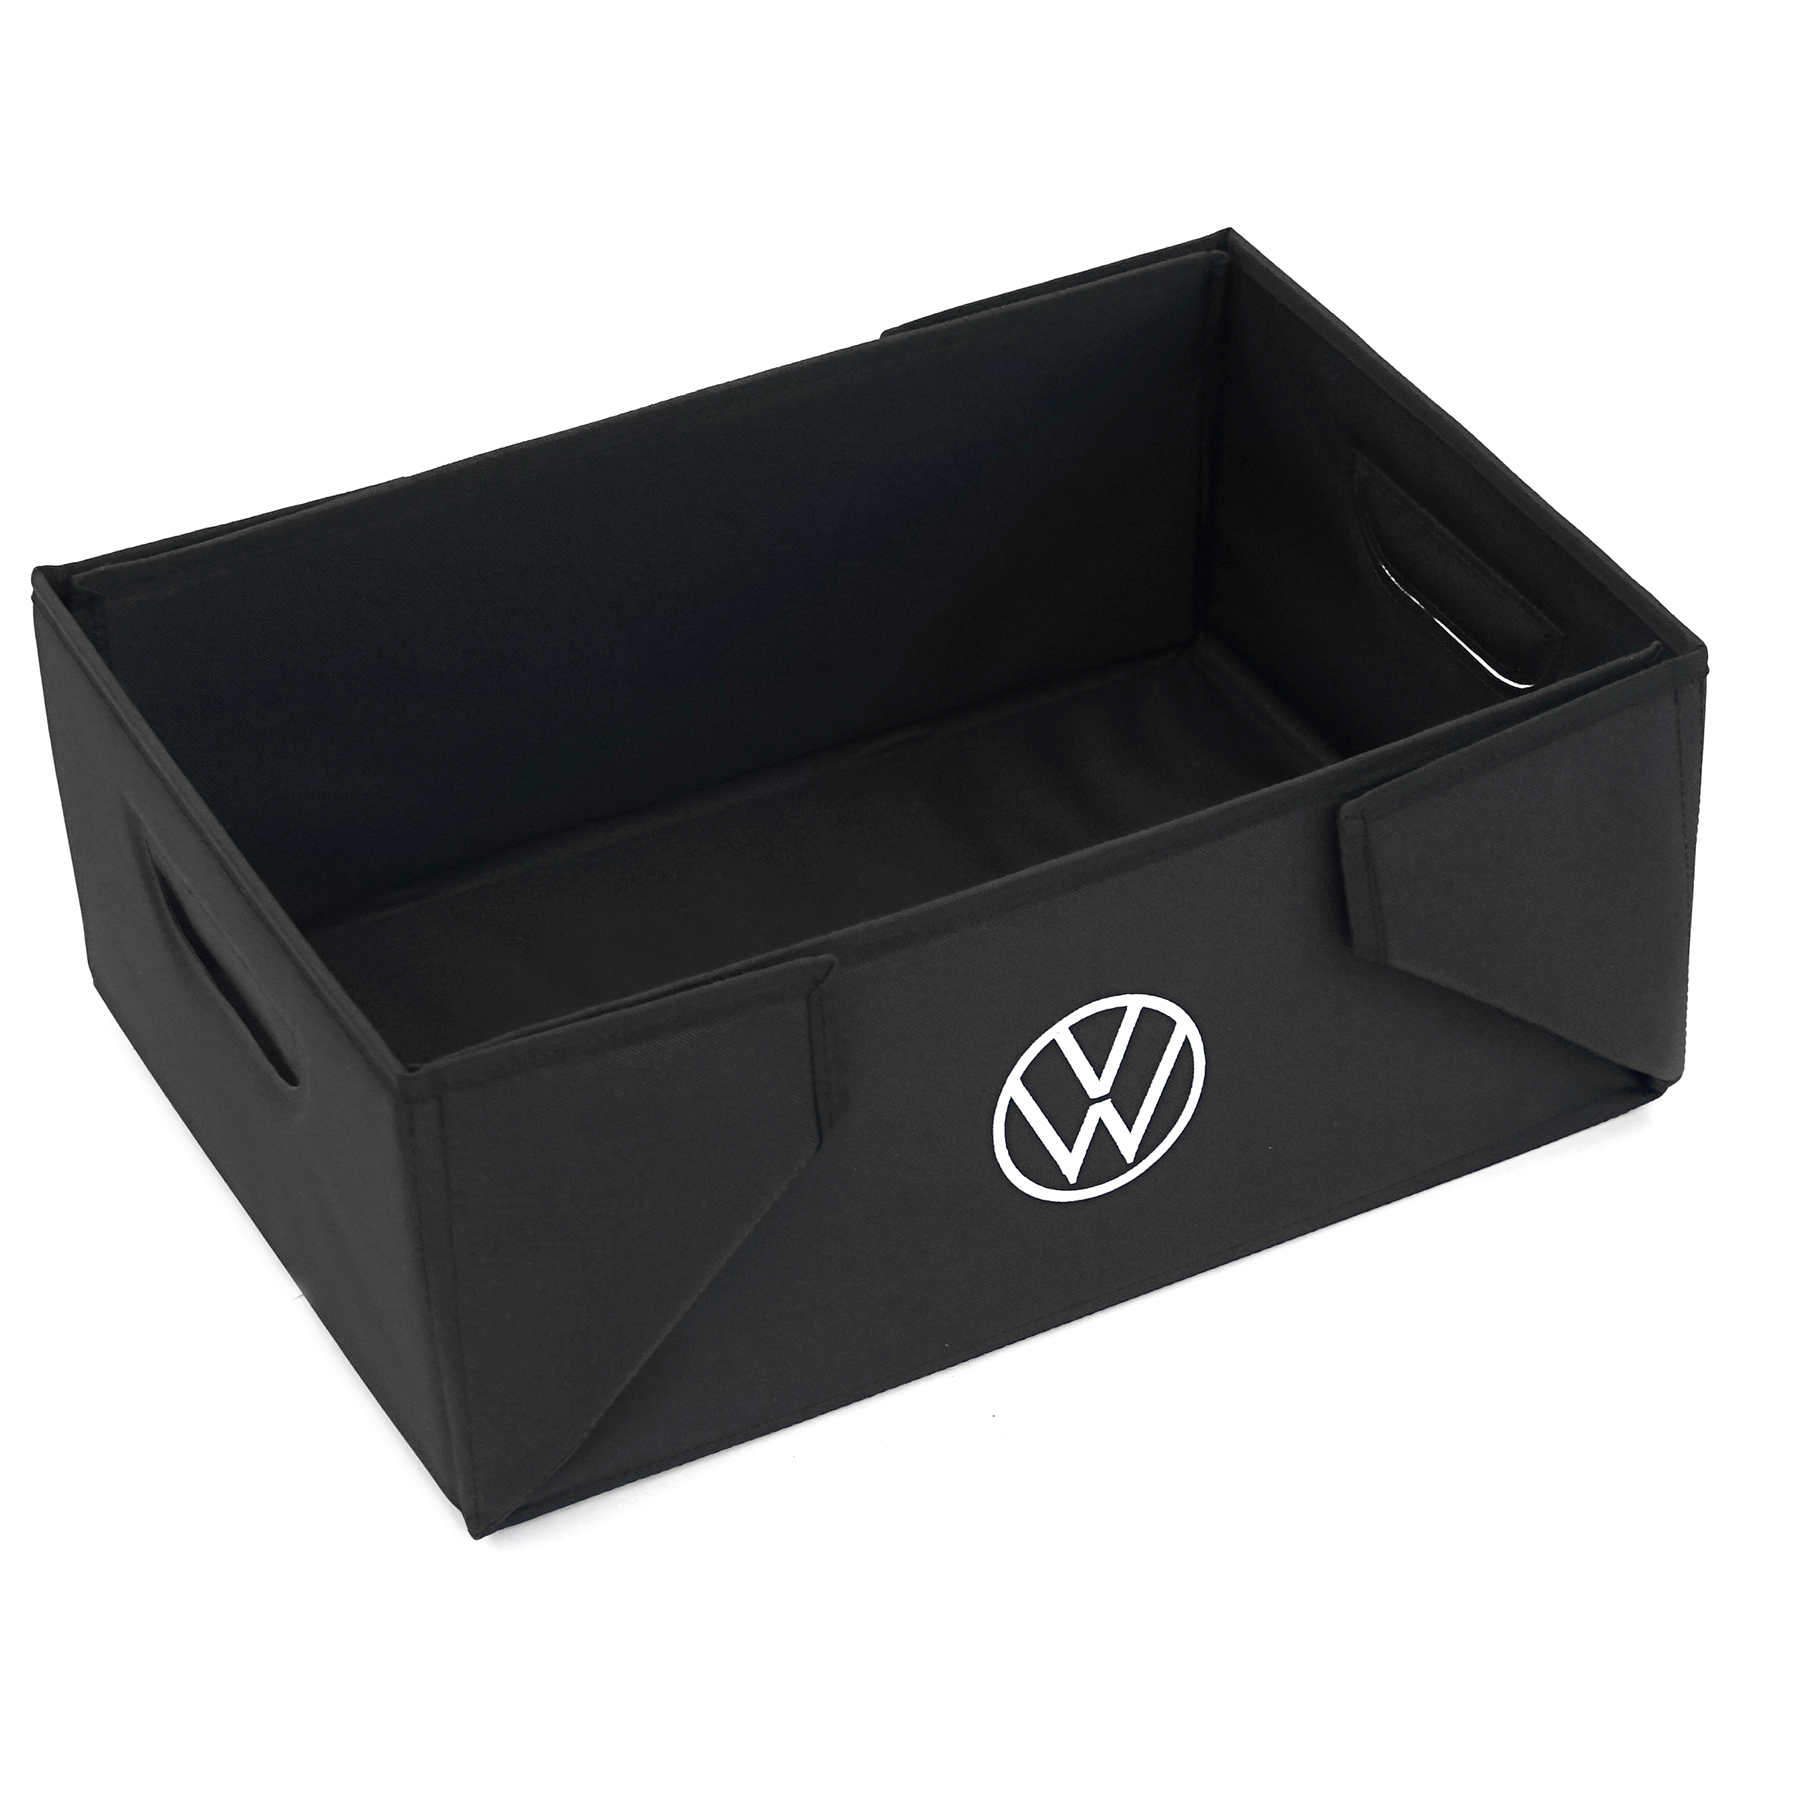 VW Folding Boot Trunk Bag Box New Genuine OEM Zubehör Gift